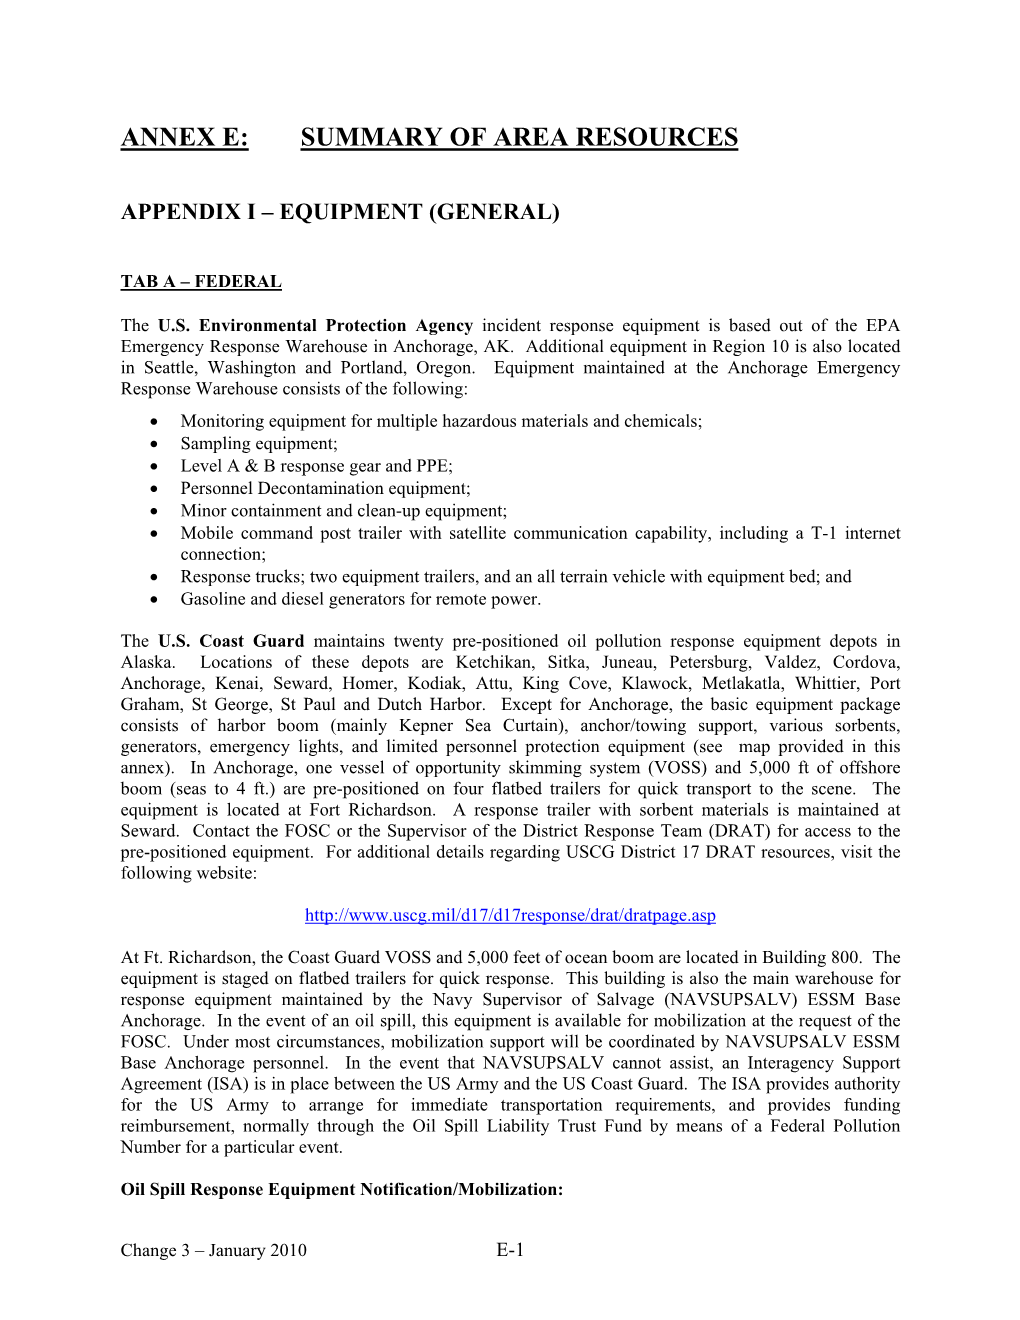 Annex E: Summary of Area Resources